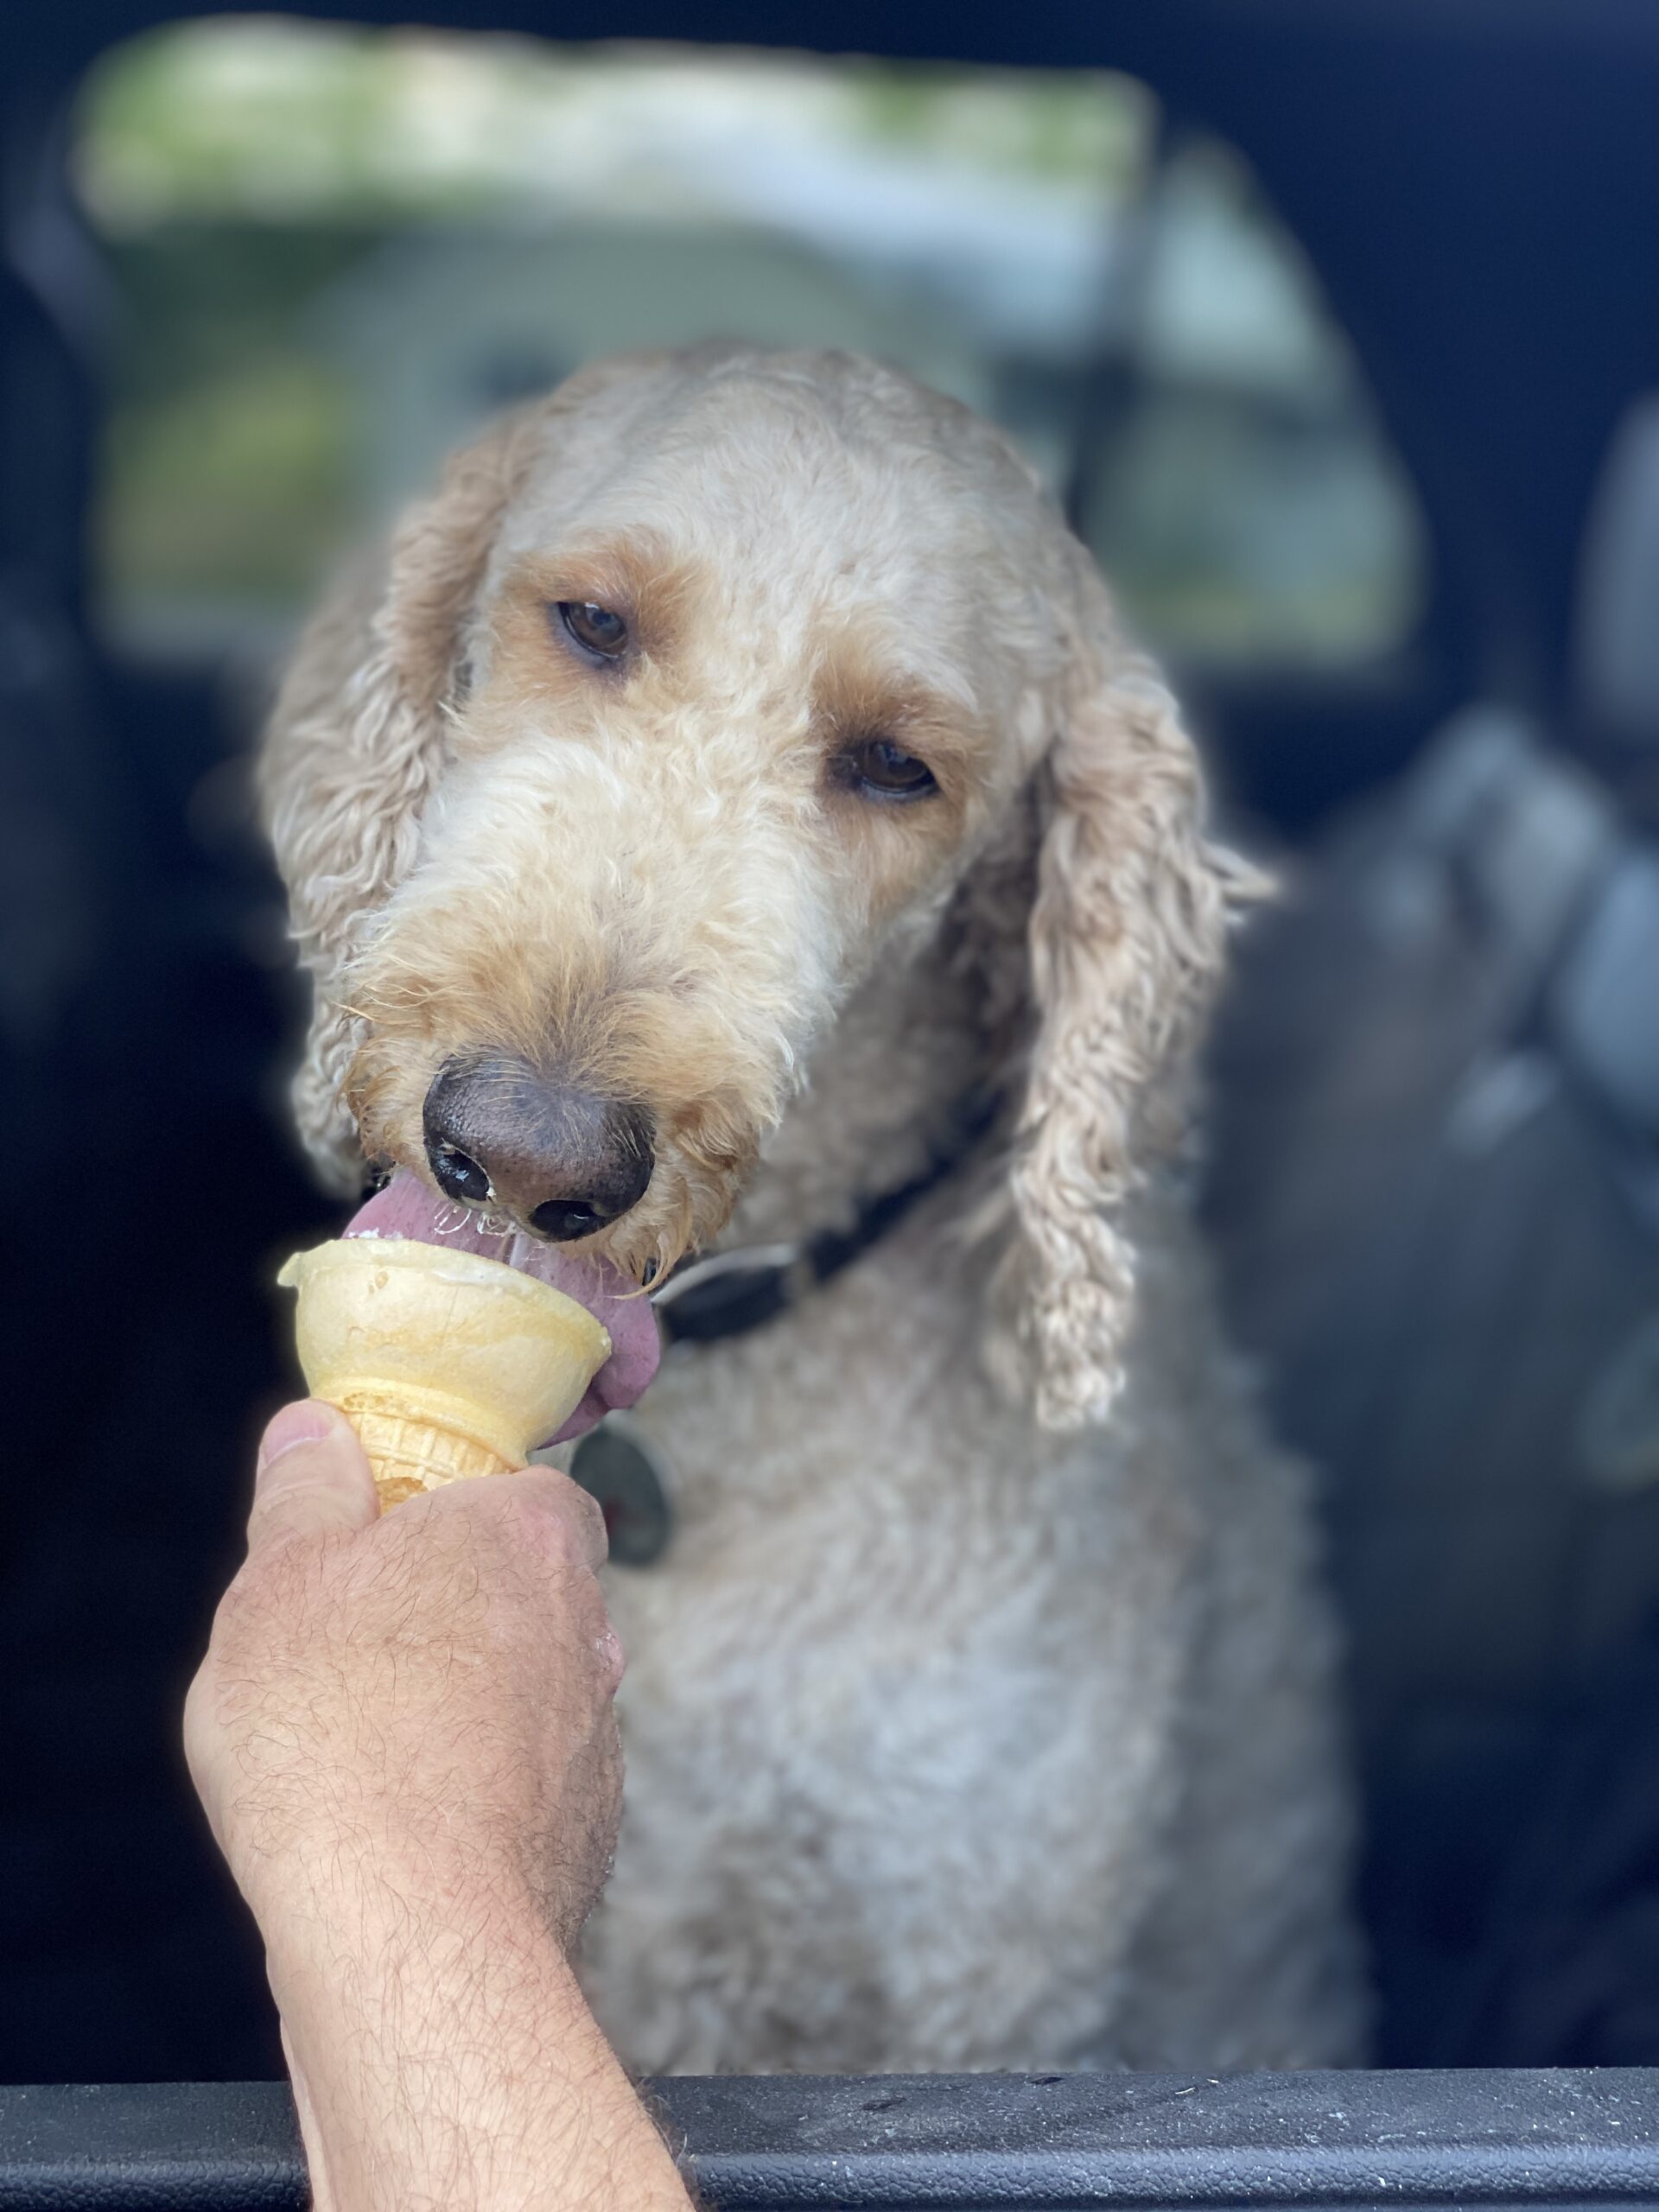 Baxter eating birthday ice cream cone